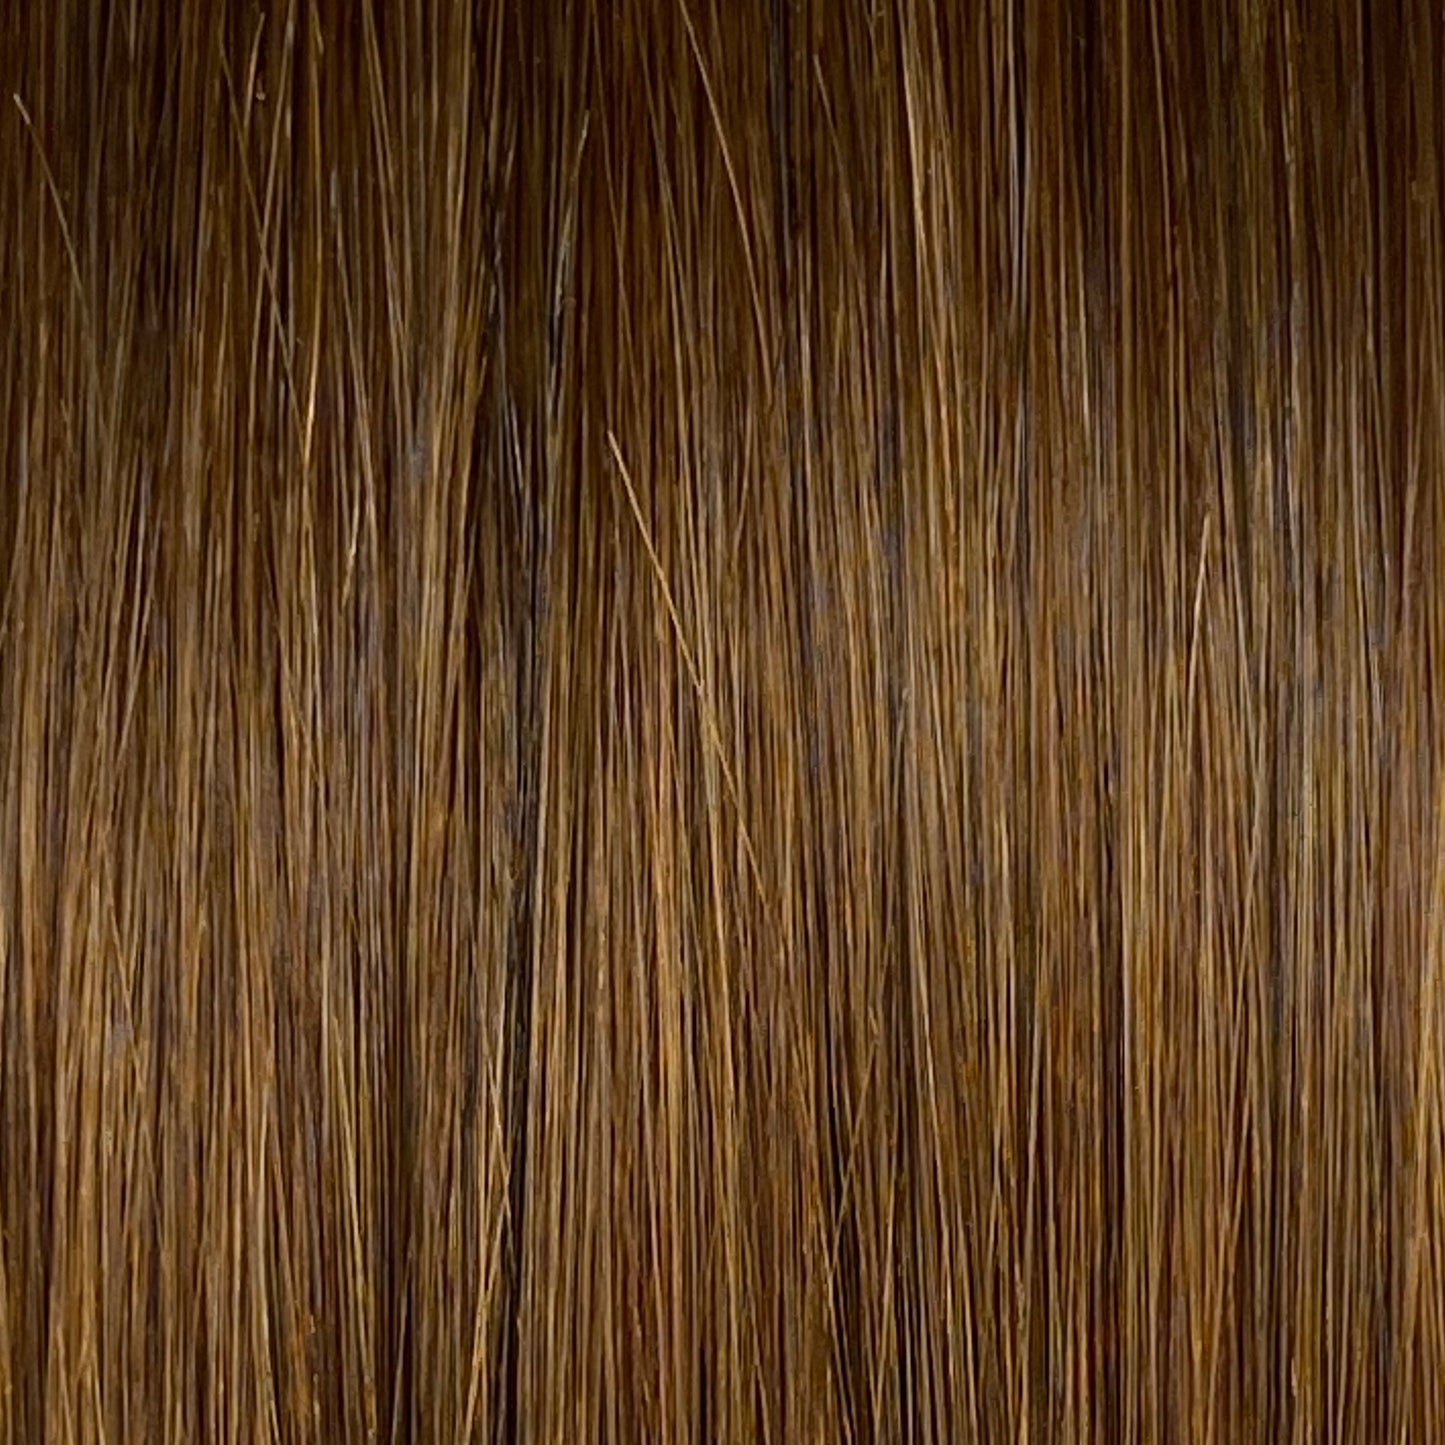 Fusion hair extensions #8 - 40cm/16 inches - Dark Blonde Fusion Euro So Cap 